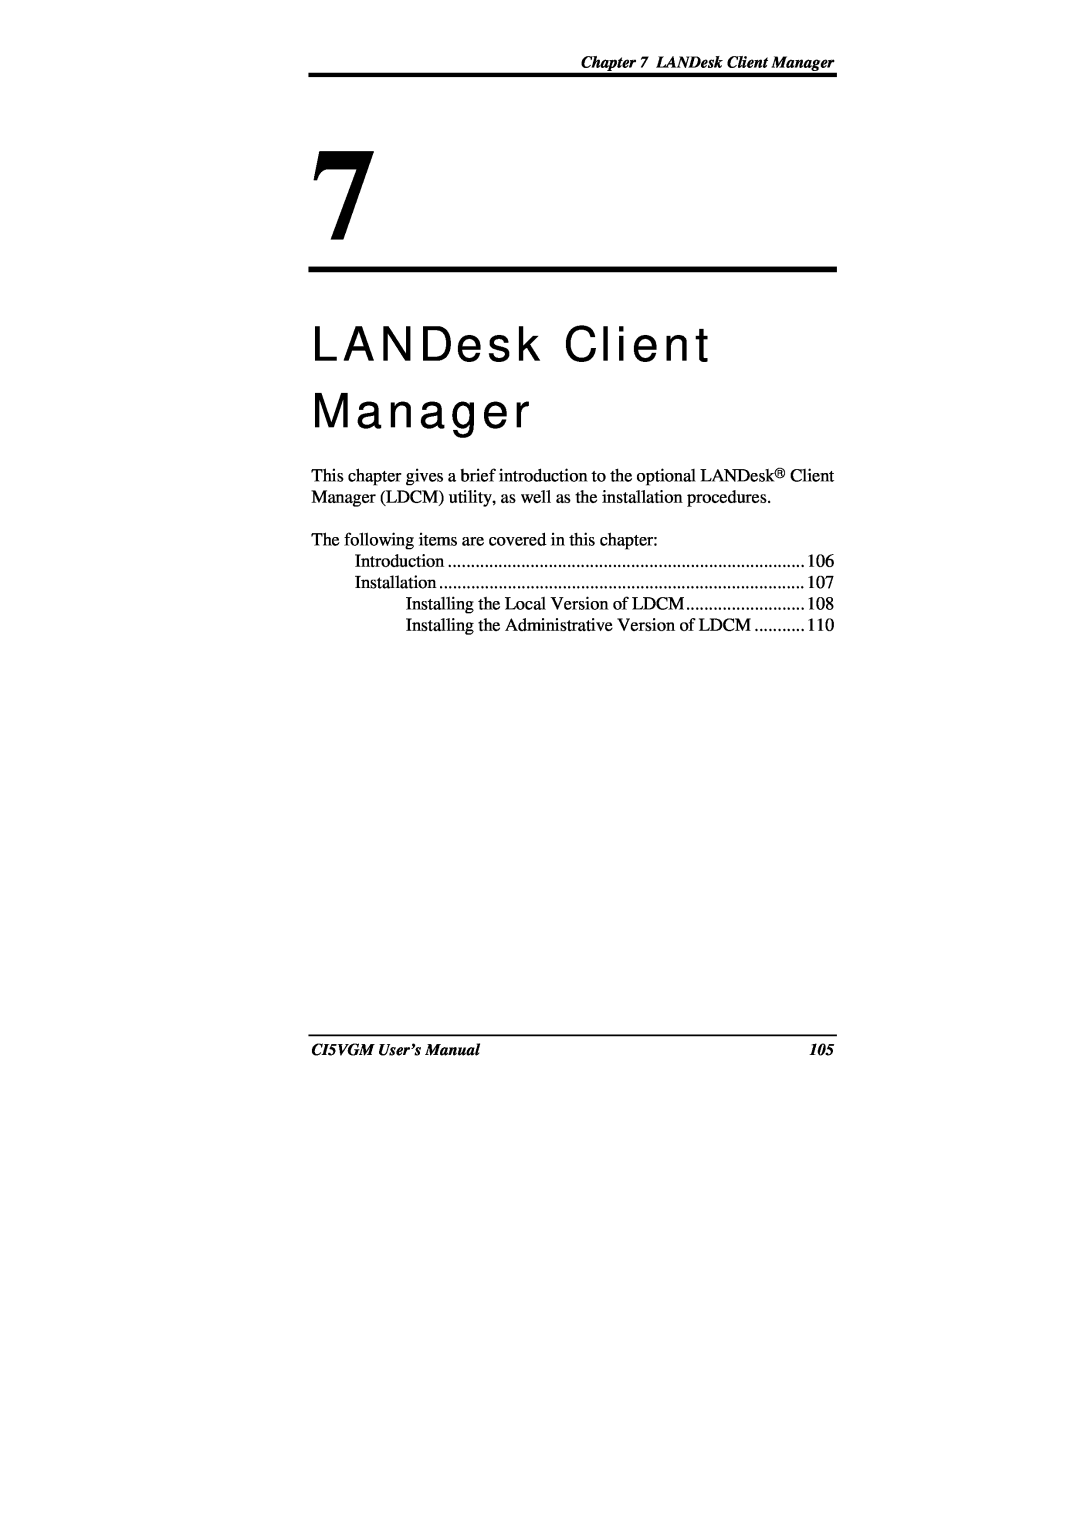 IBM CI5VGM Series user manual LANDesk Client Manager 